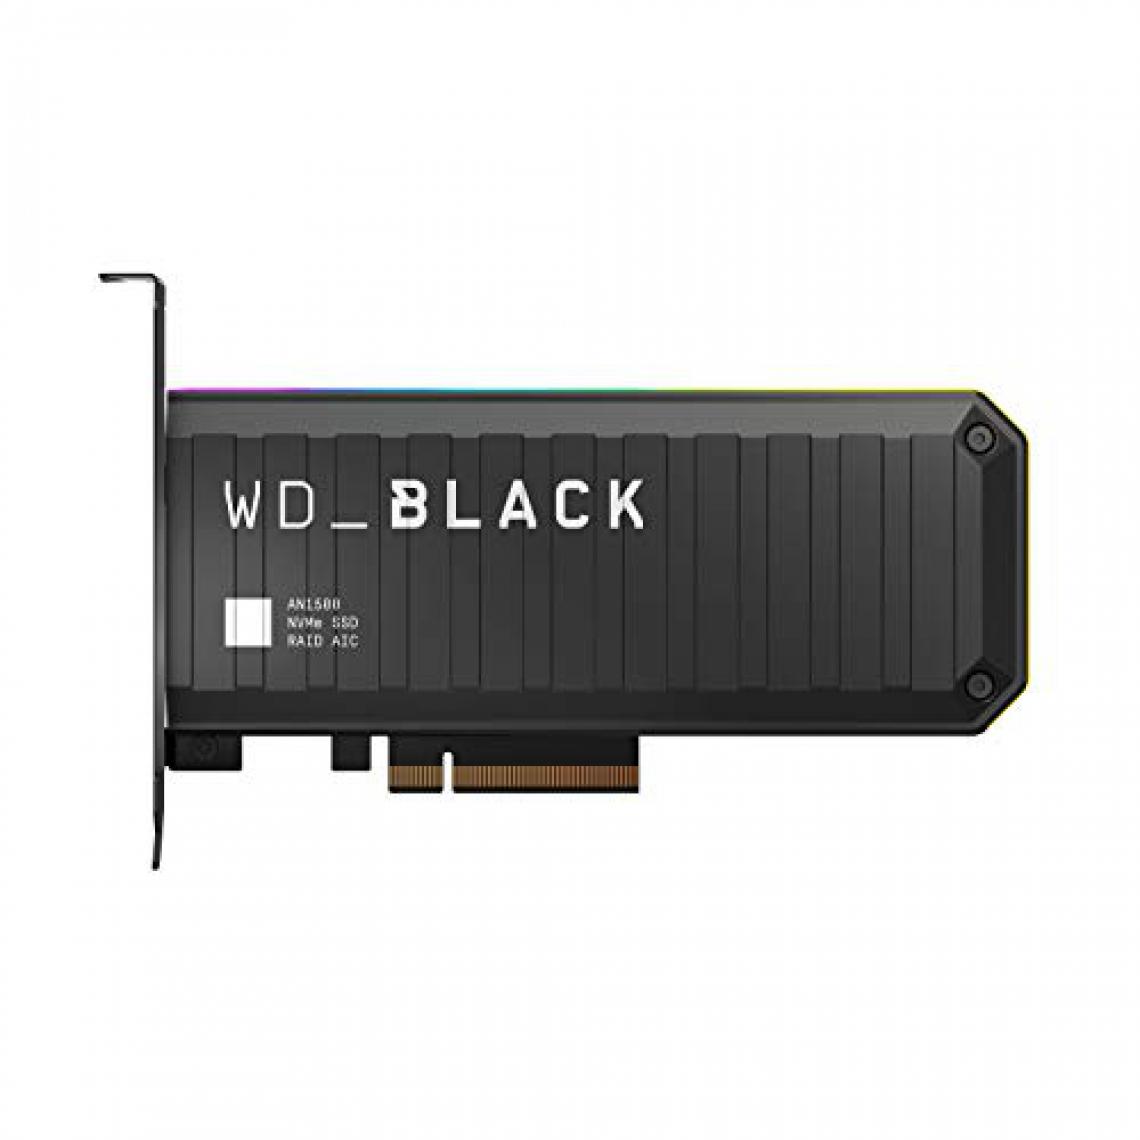 Western Digital - WD Black 1To AN1500 NVMe SSD Add-In-Card WD Black 1To AN1500 NVMe SSD Add-In-Card PCIe Gen3 x8 internal single-packed - SSD Interne